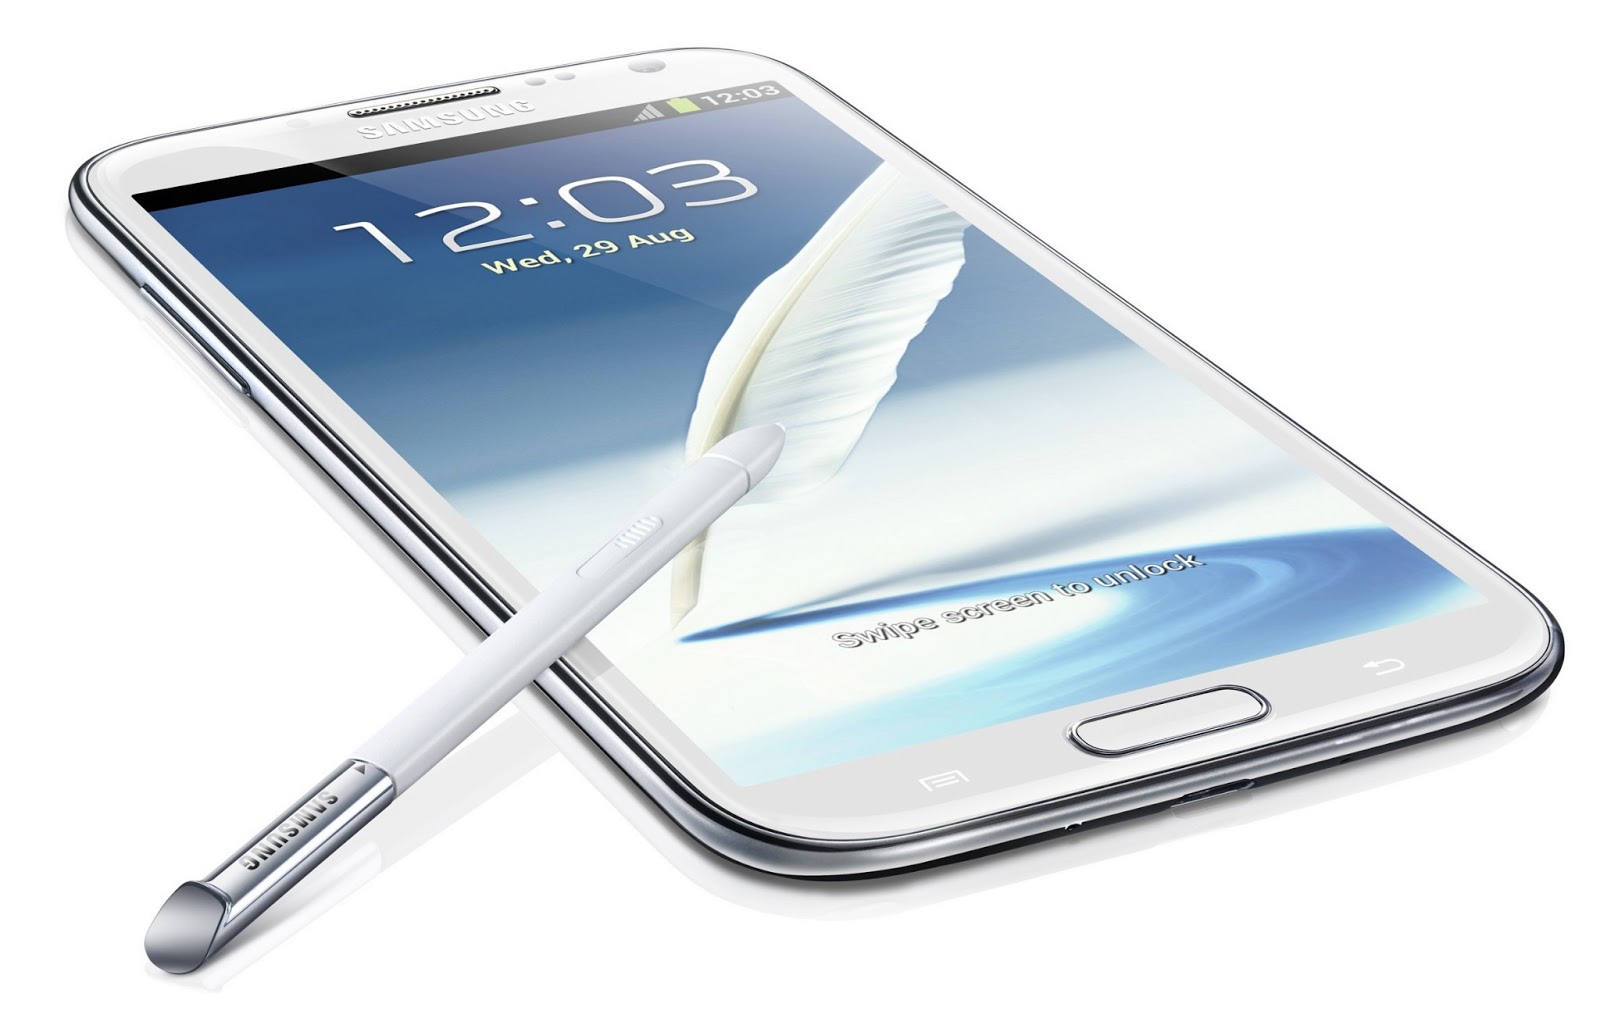 Samsung galaxy s i9000 unlock code free for 5053